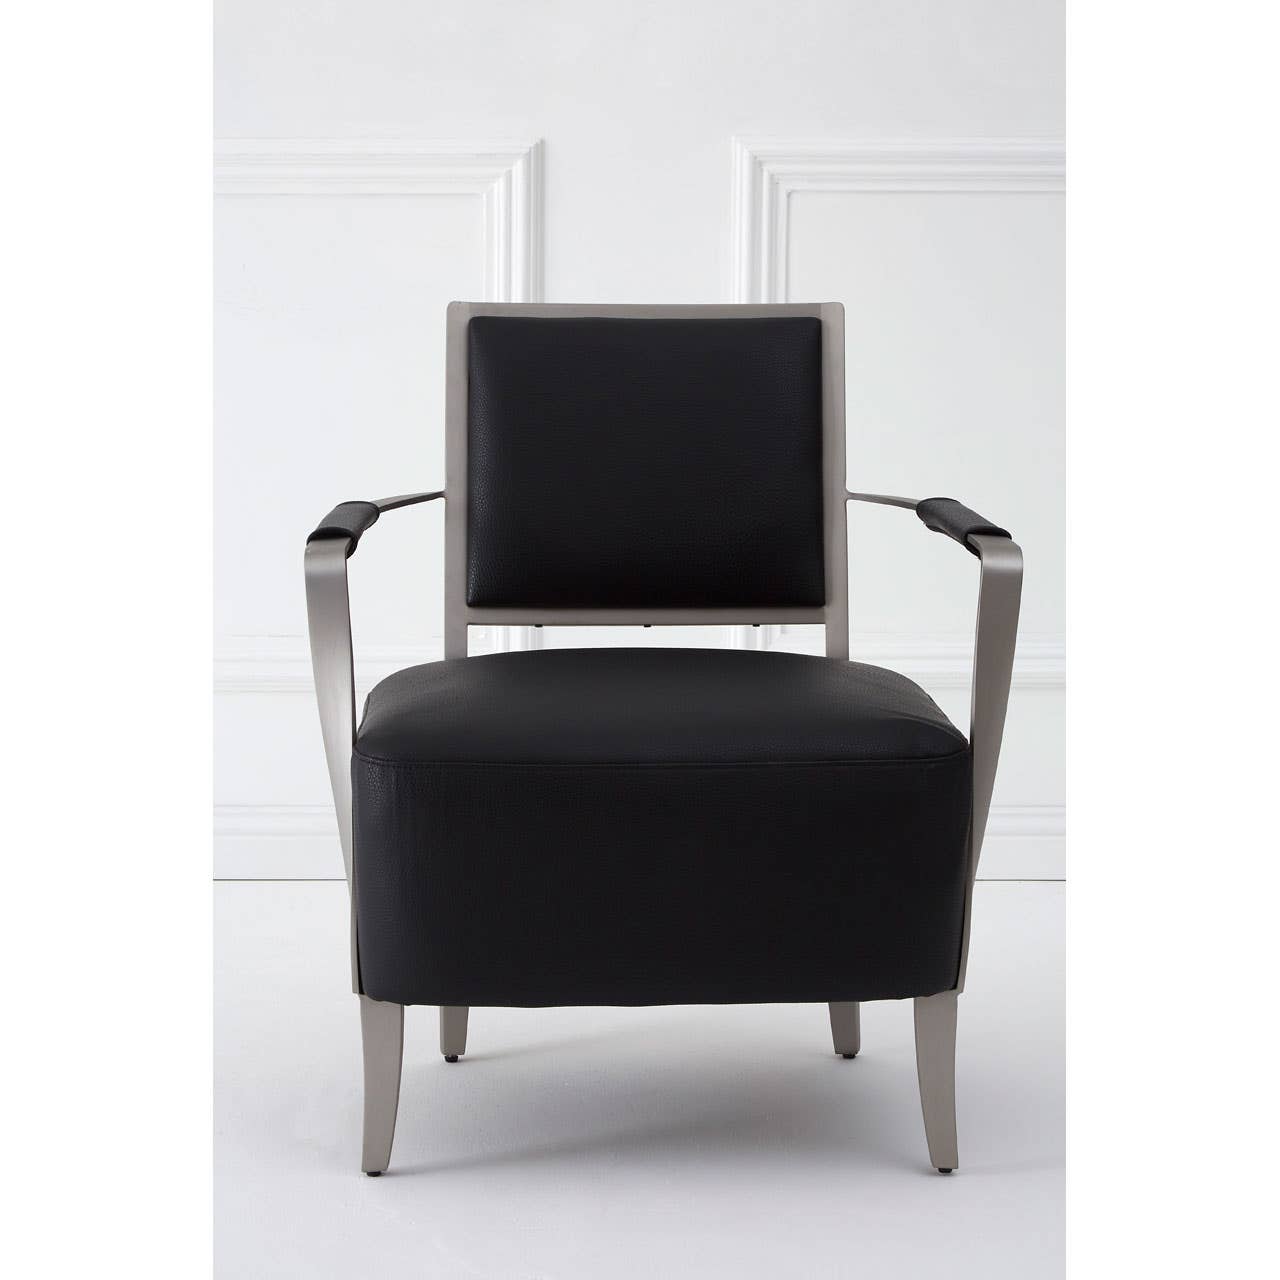 Moda Black Leather Chair